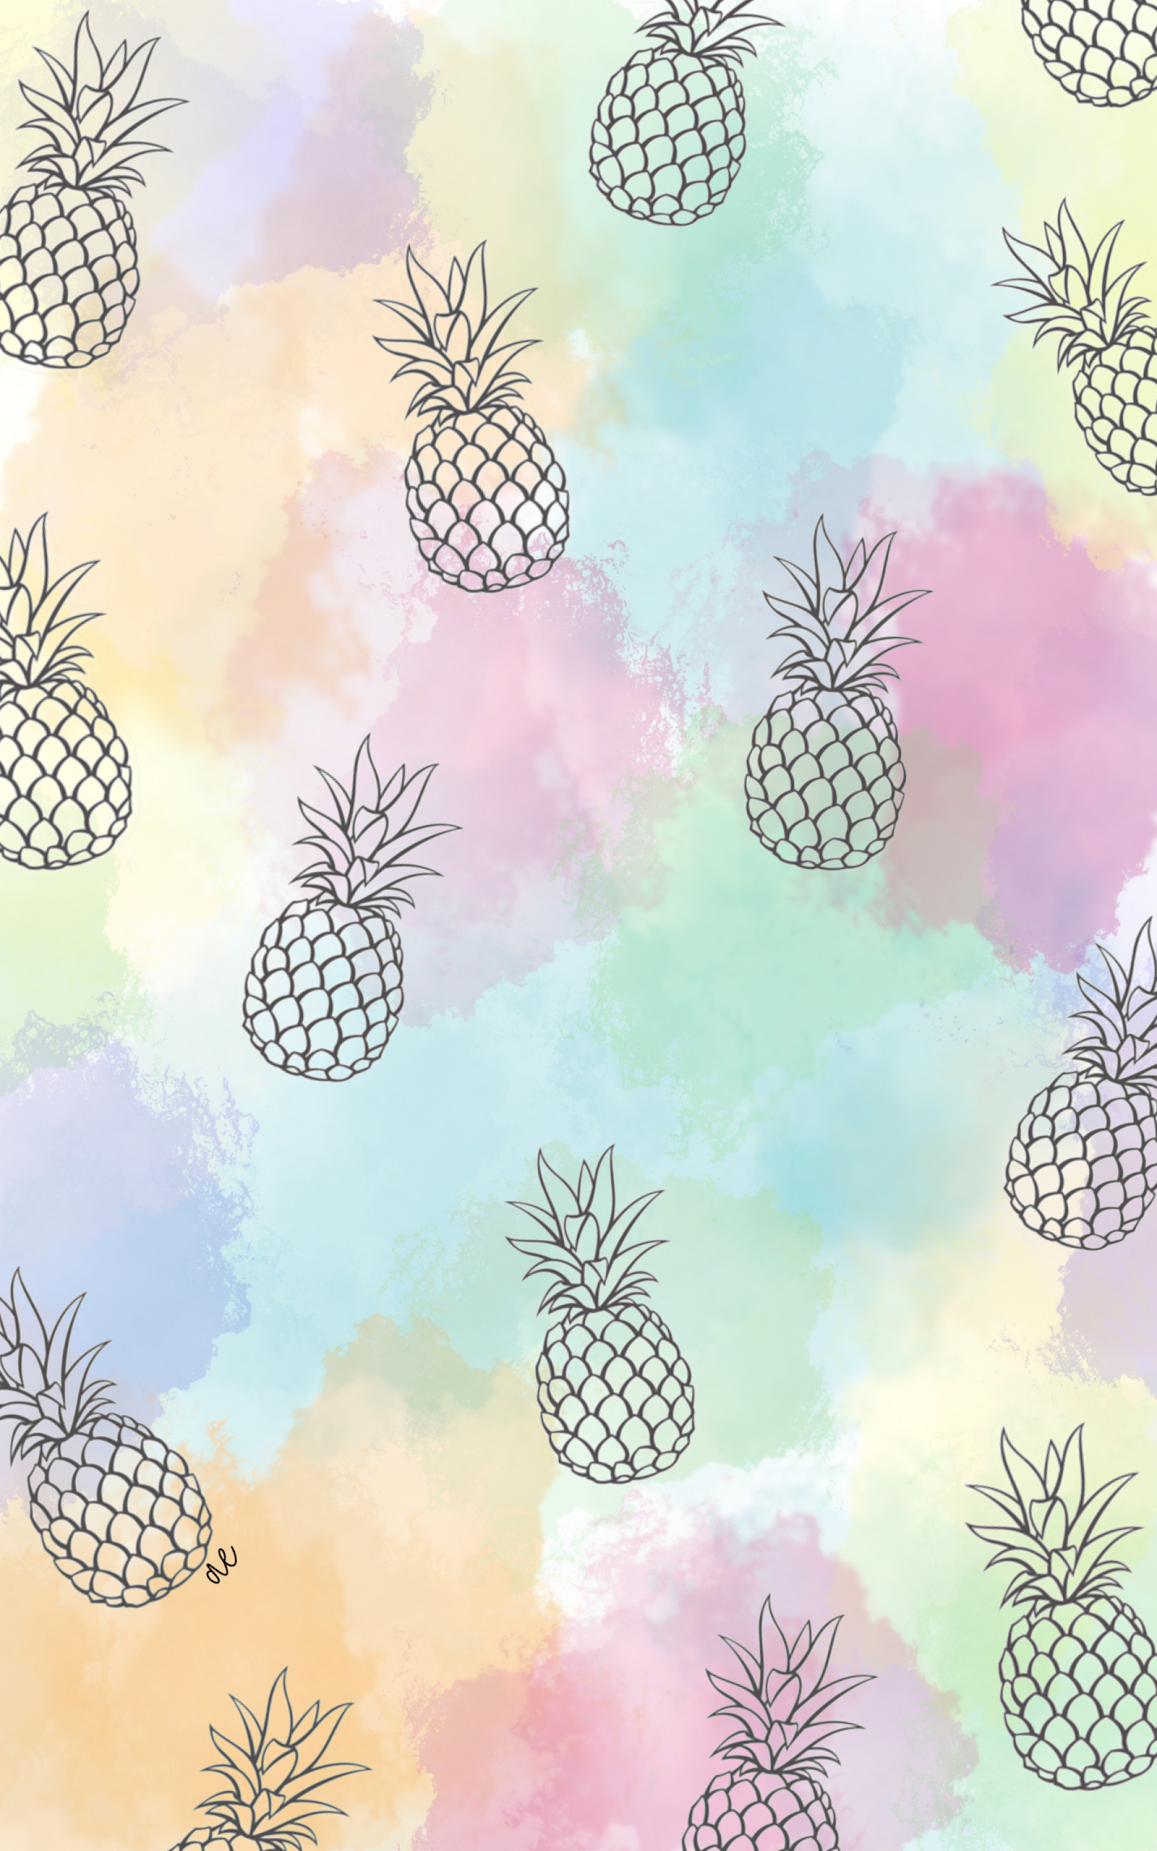 Pineapple vacation wallpaper pineapple wallpaper cute pineapple wallpaper iphone wallpaper pineapple